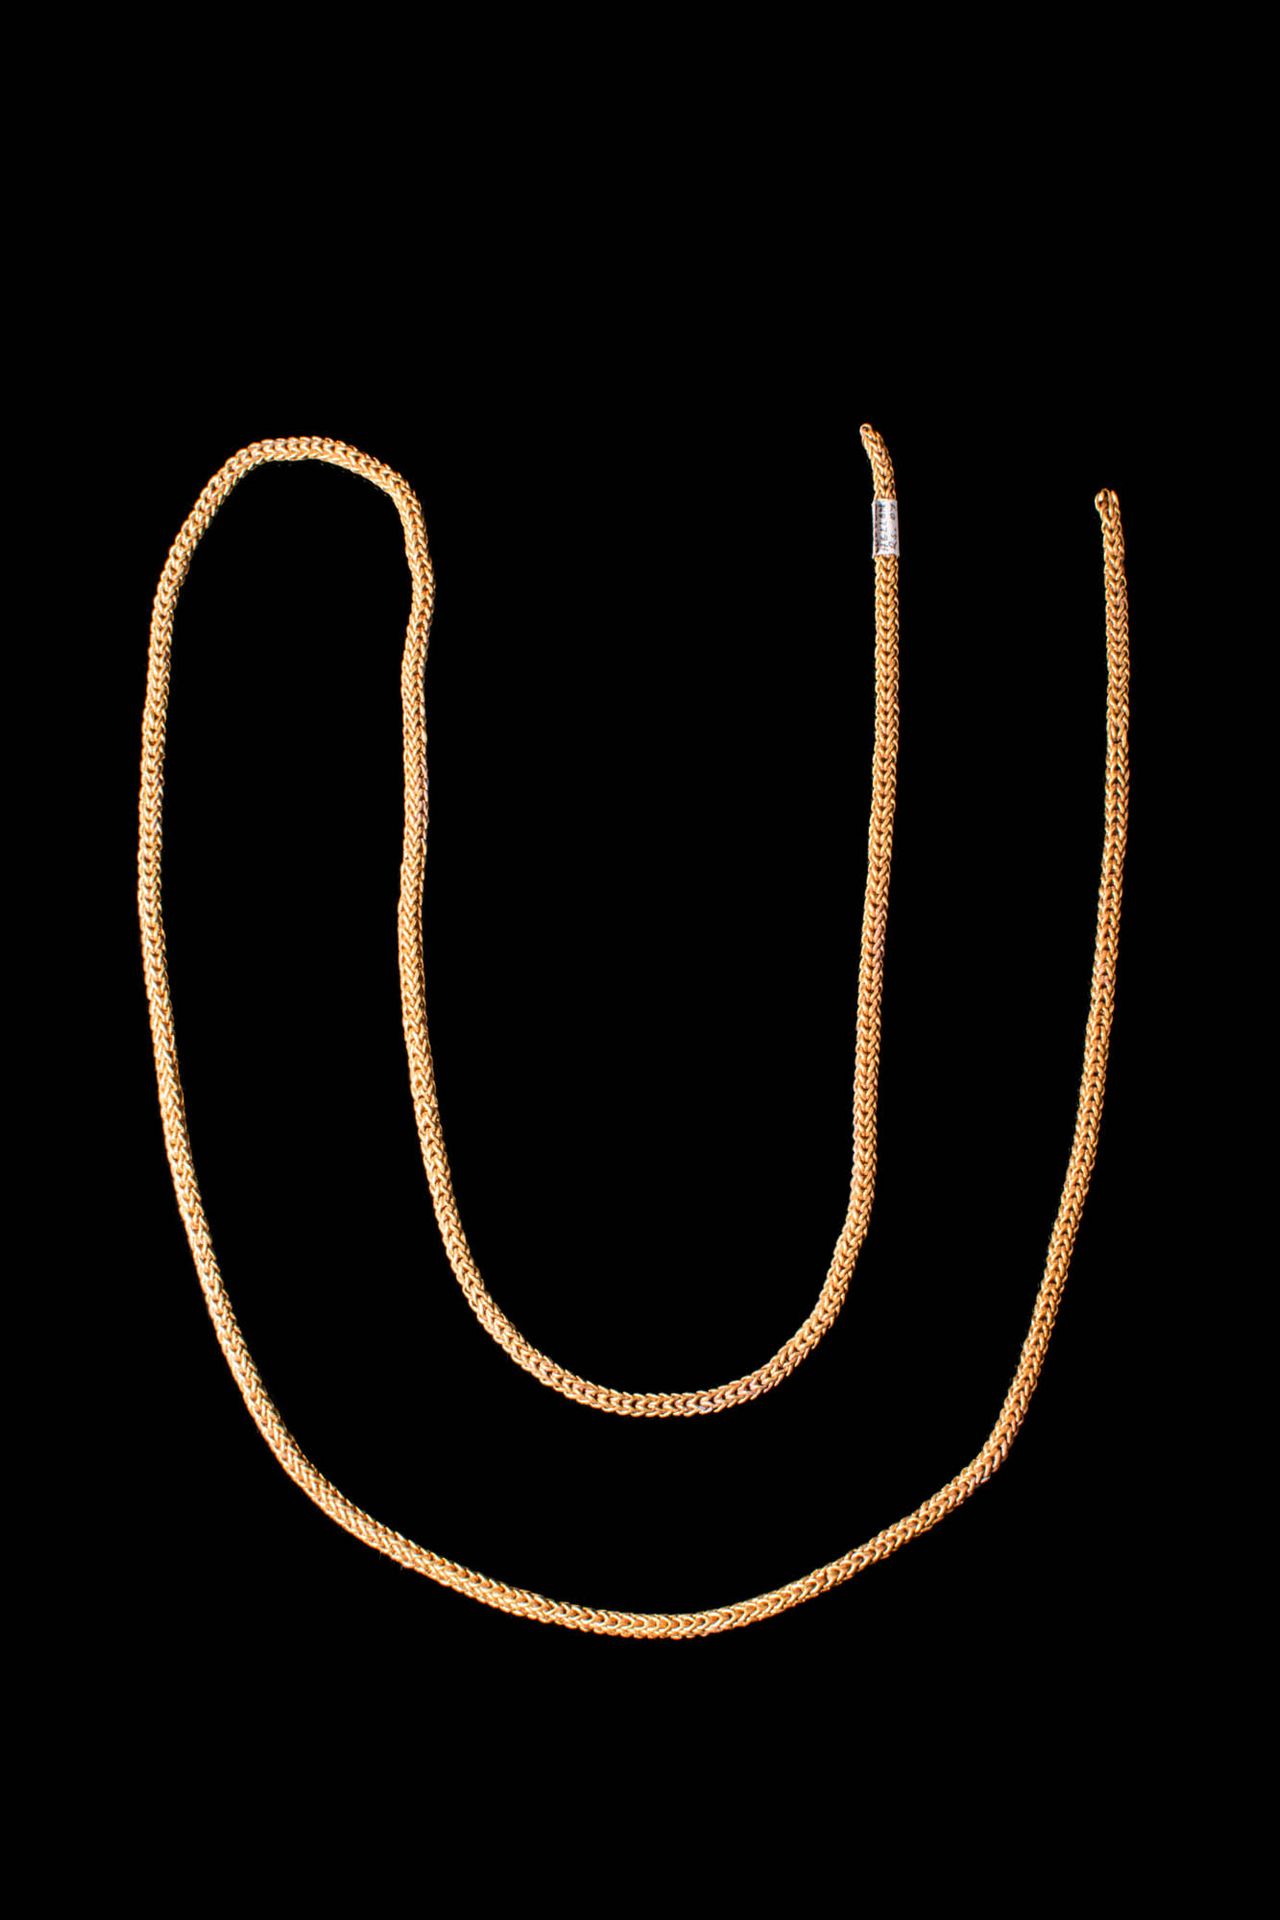 HEAVY HELLENISTIC GOLD CHAIN Ca. 323 - 146 AV.
Un lourd collier hellénistique en&hellip;